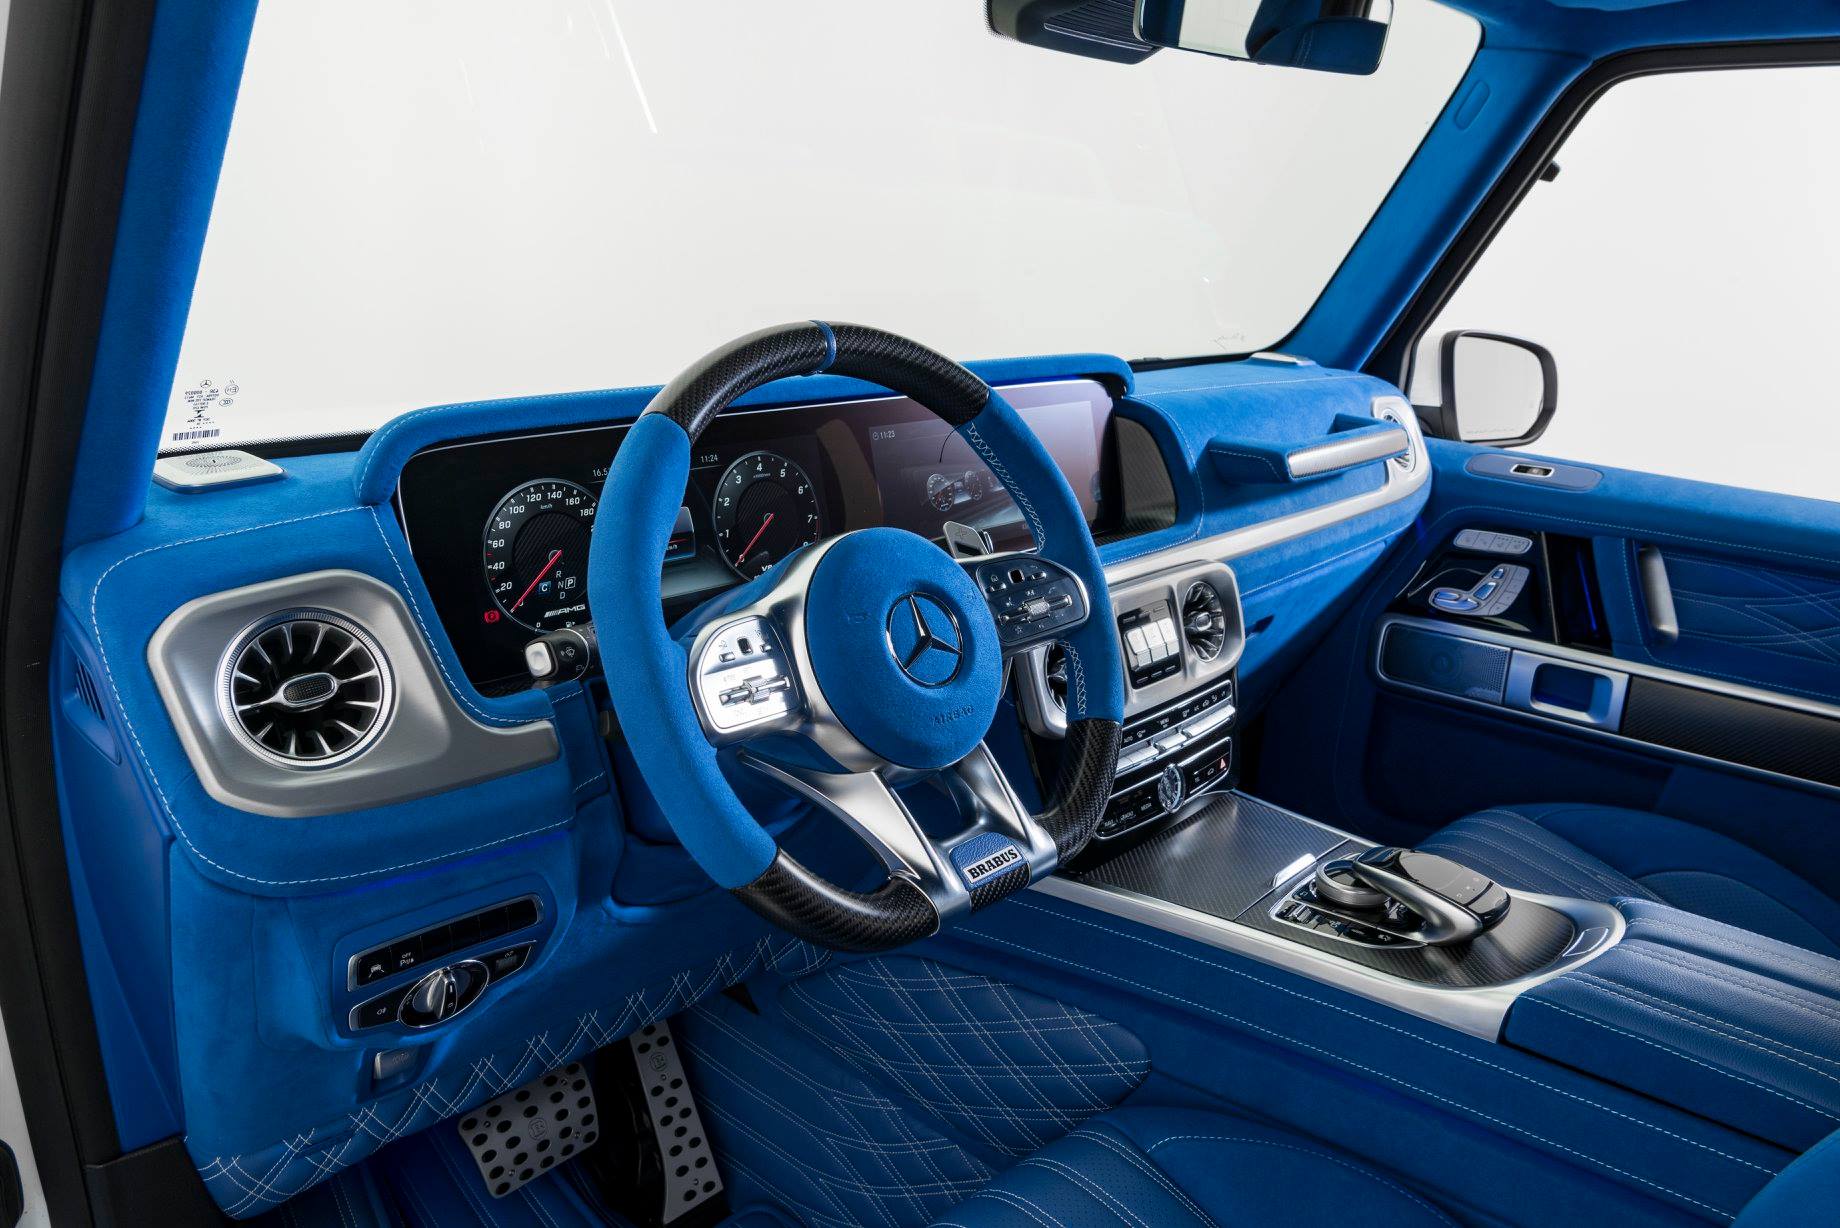 Brabus Upgrades the Interior of the 2019 MercedesAMG G63